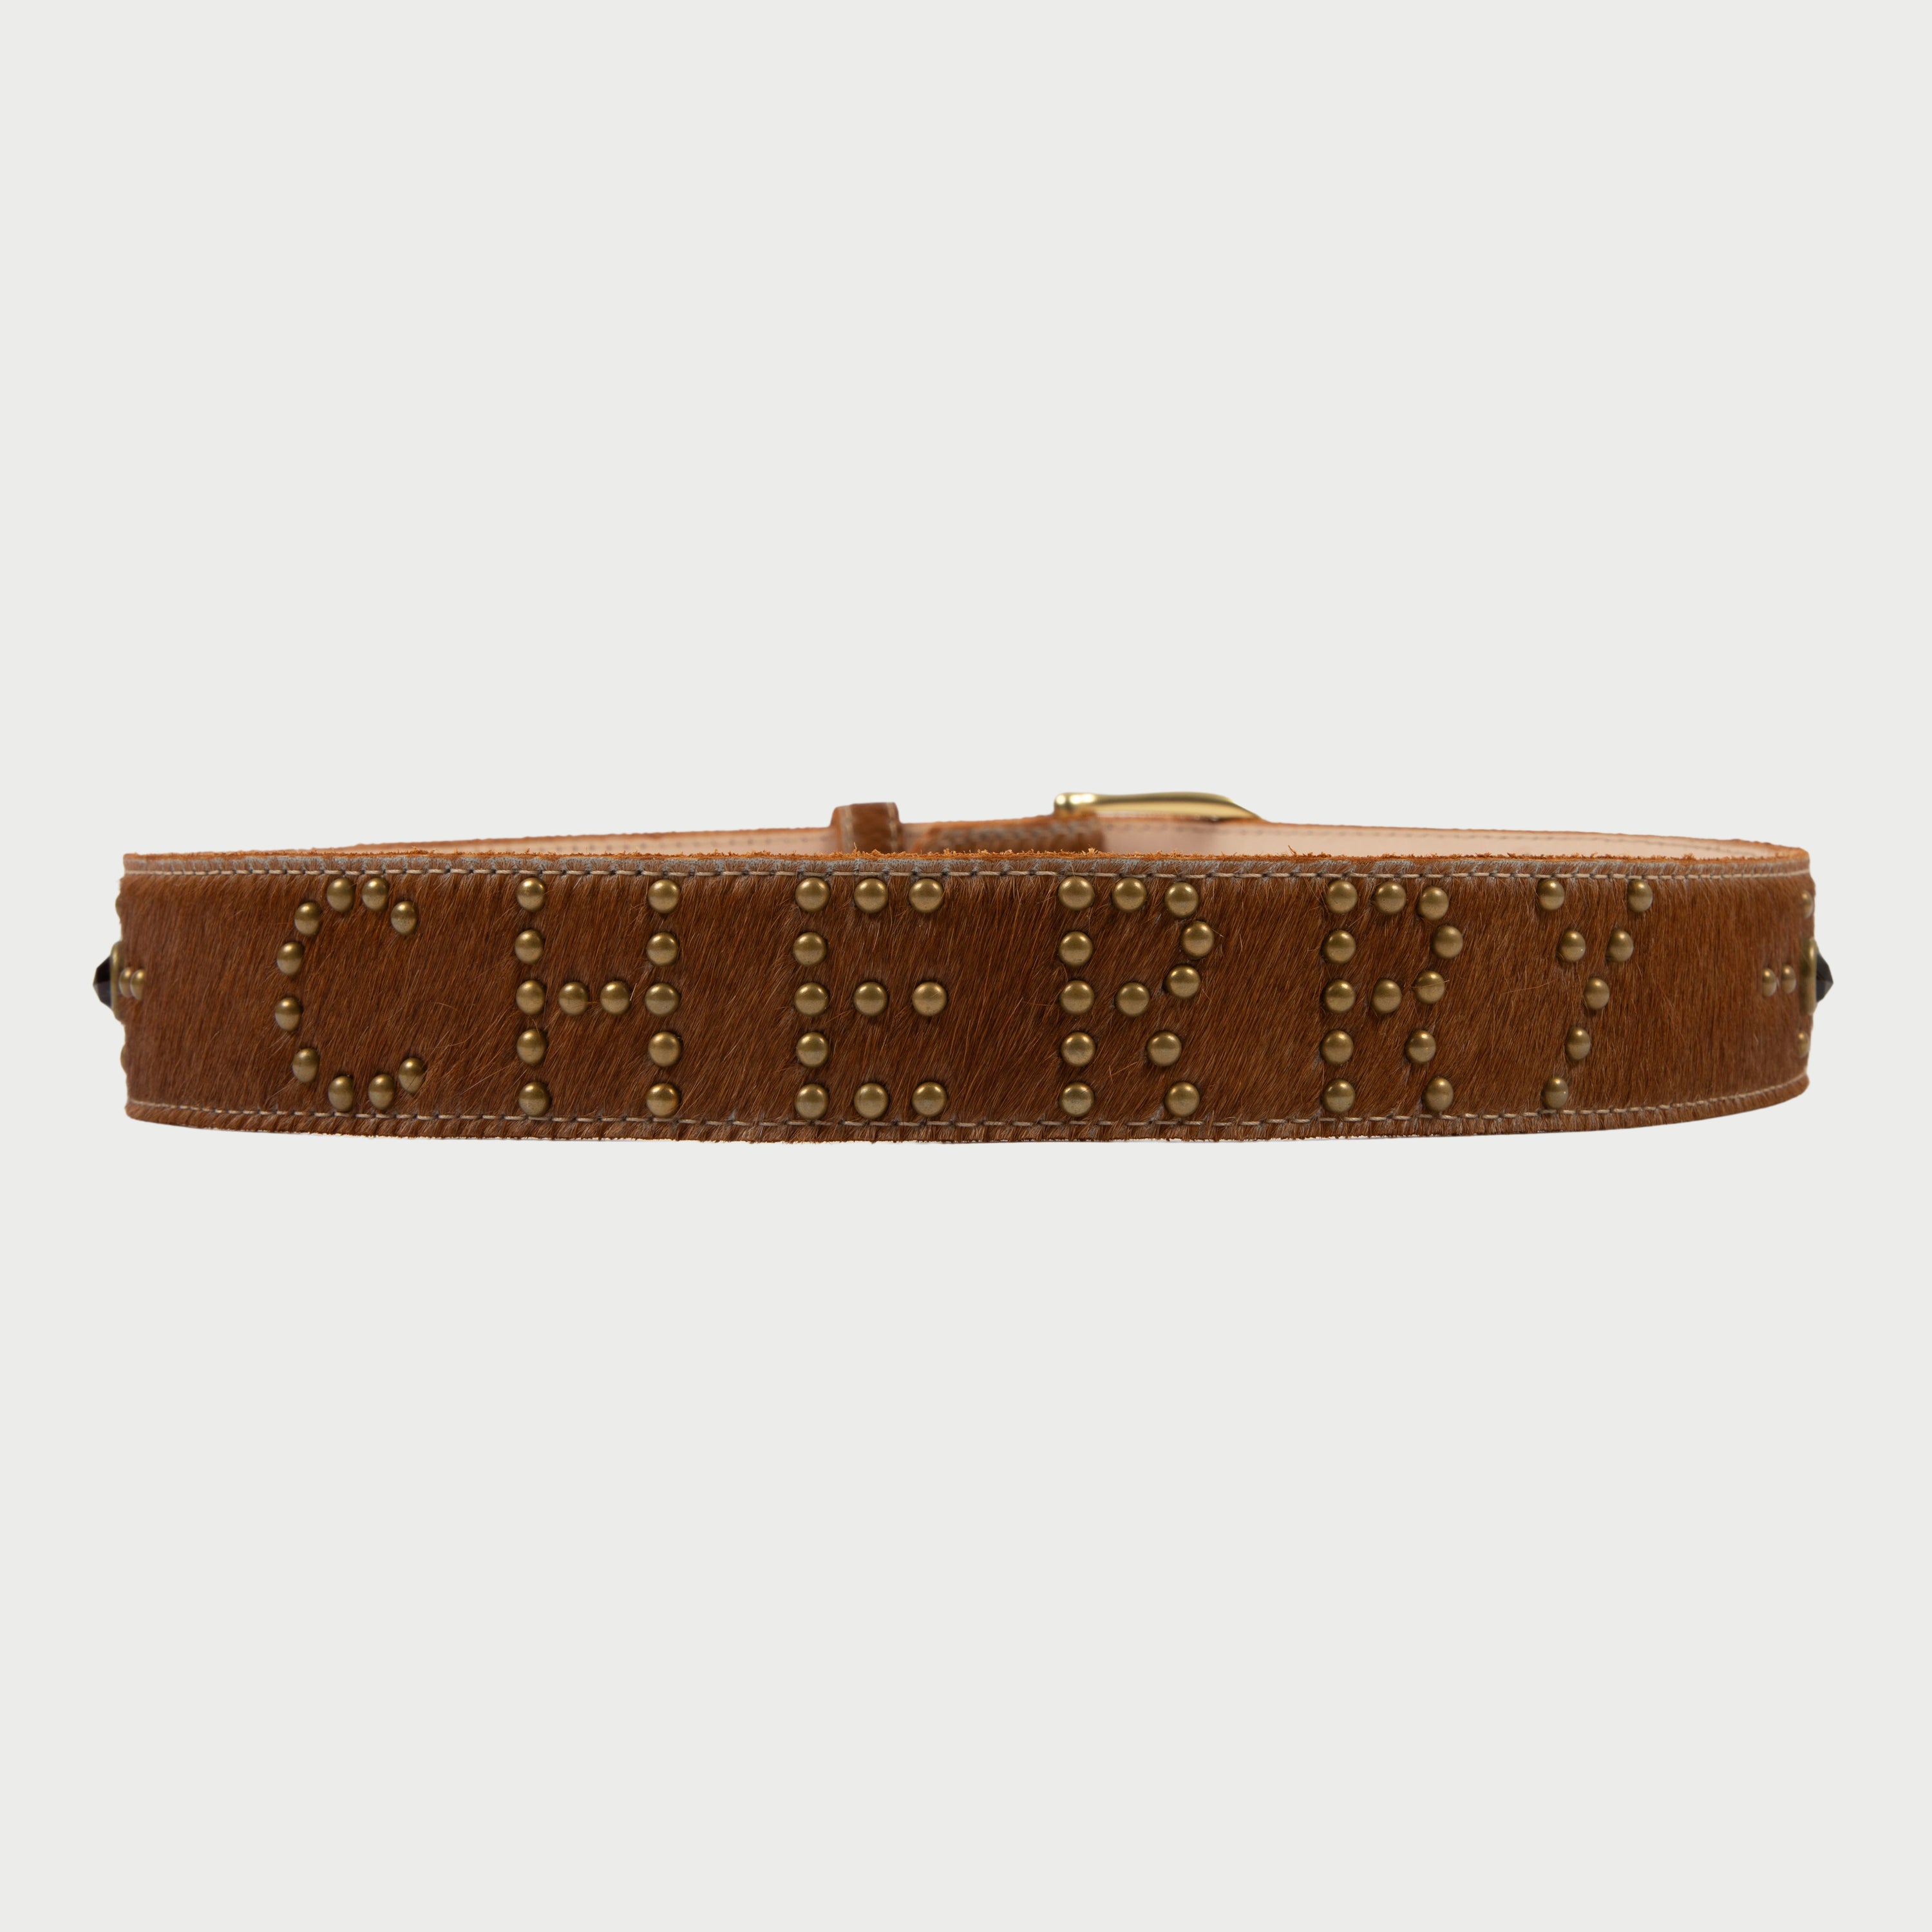 Studded Leather Belt (Calf Hair)